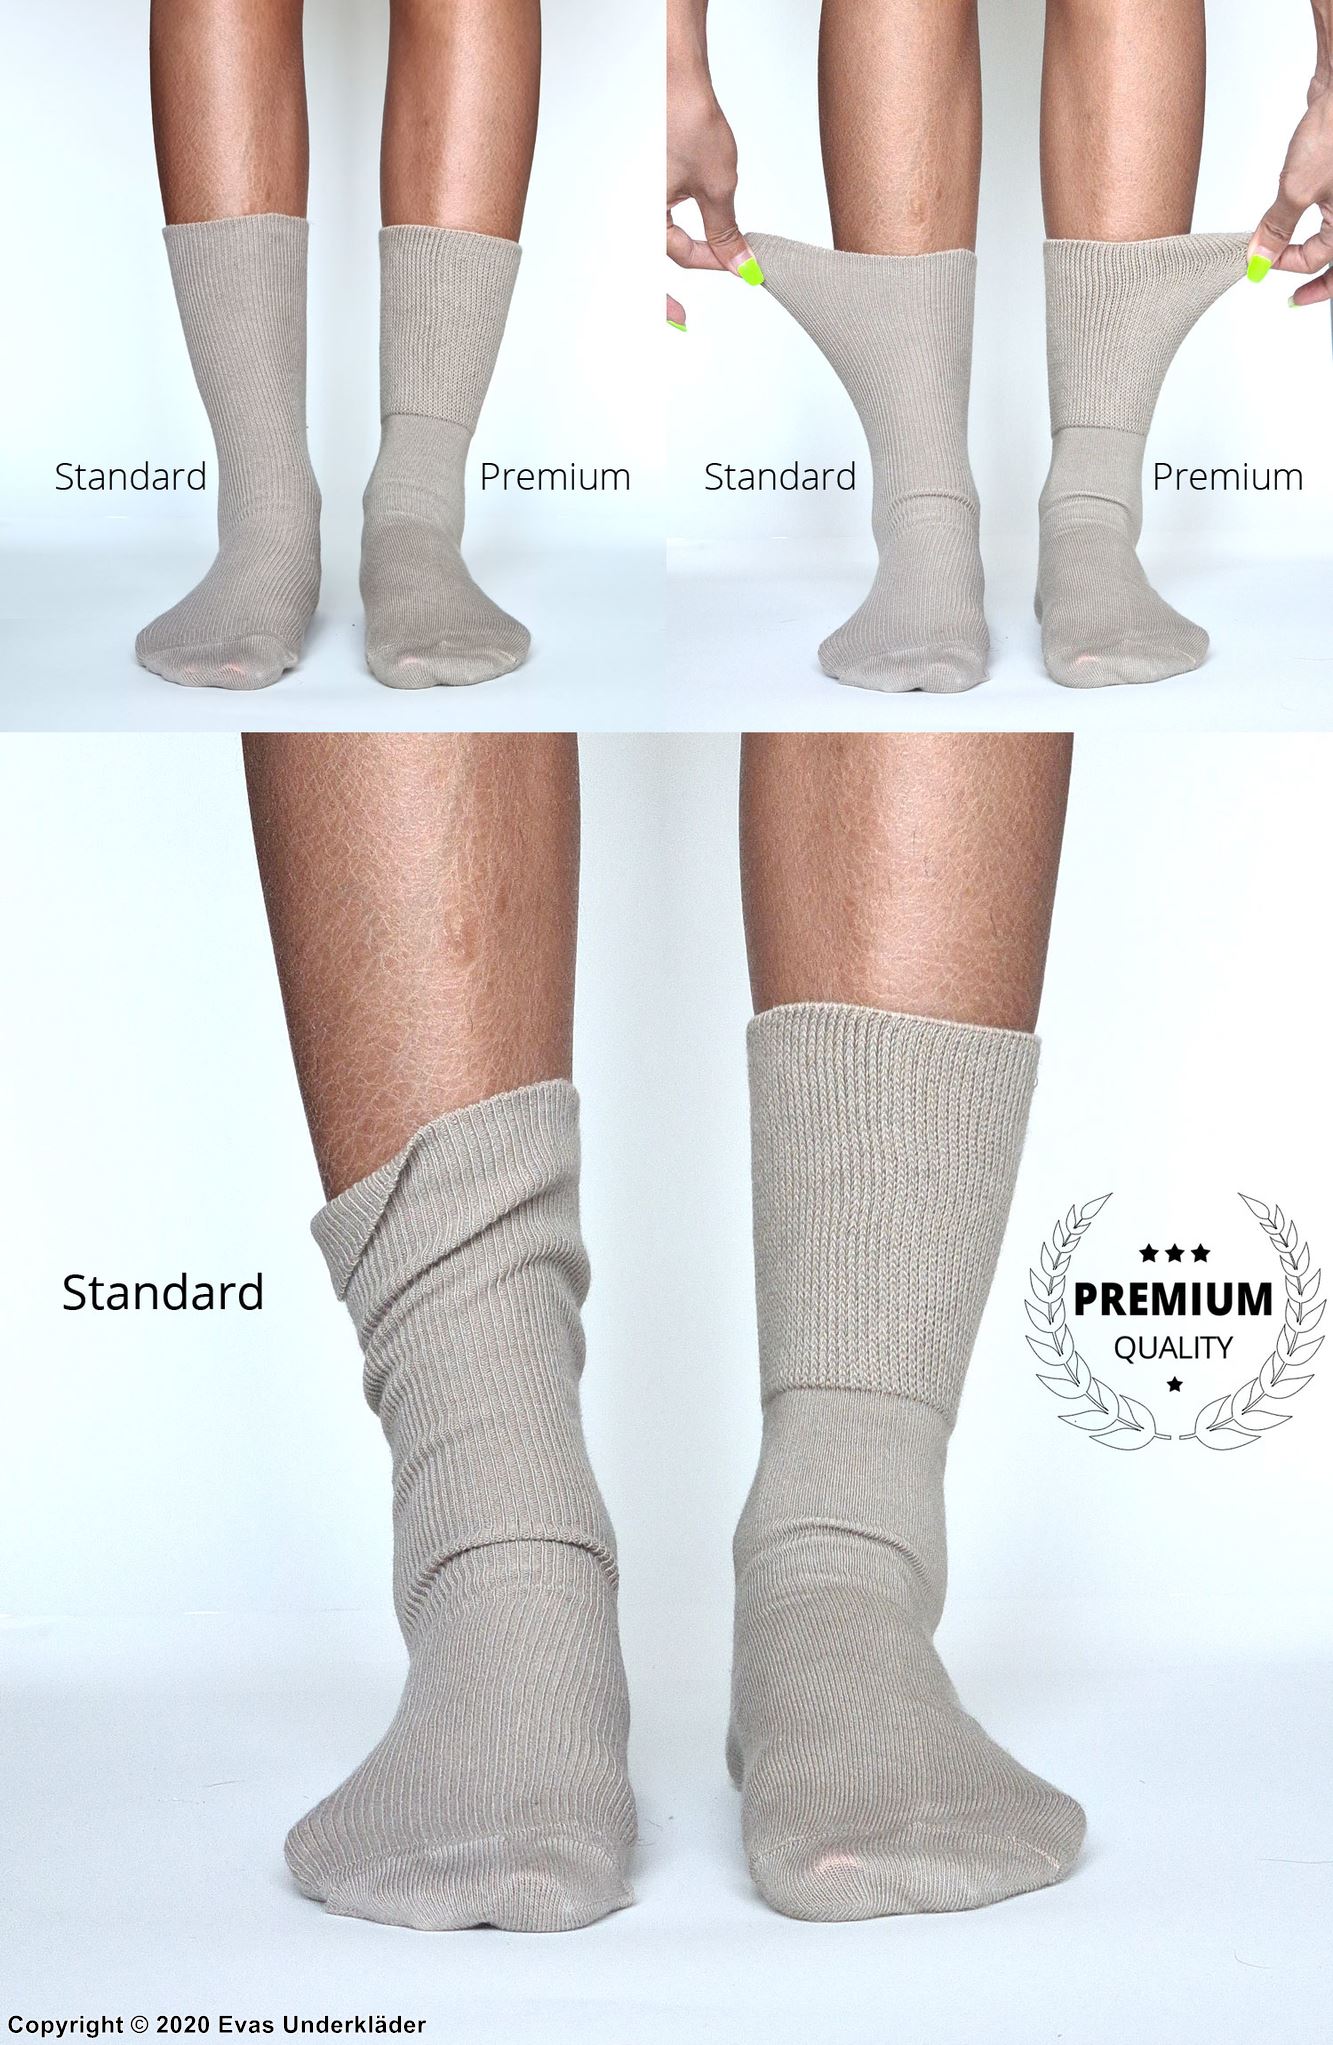 Comfort socks (unisex), cotton, non-restrictive cuffs, 8-pack